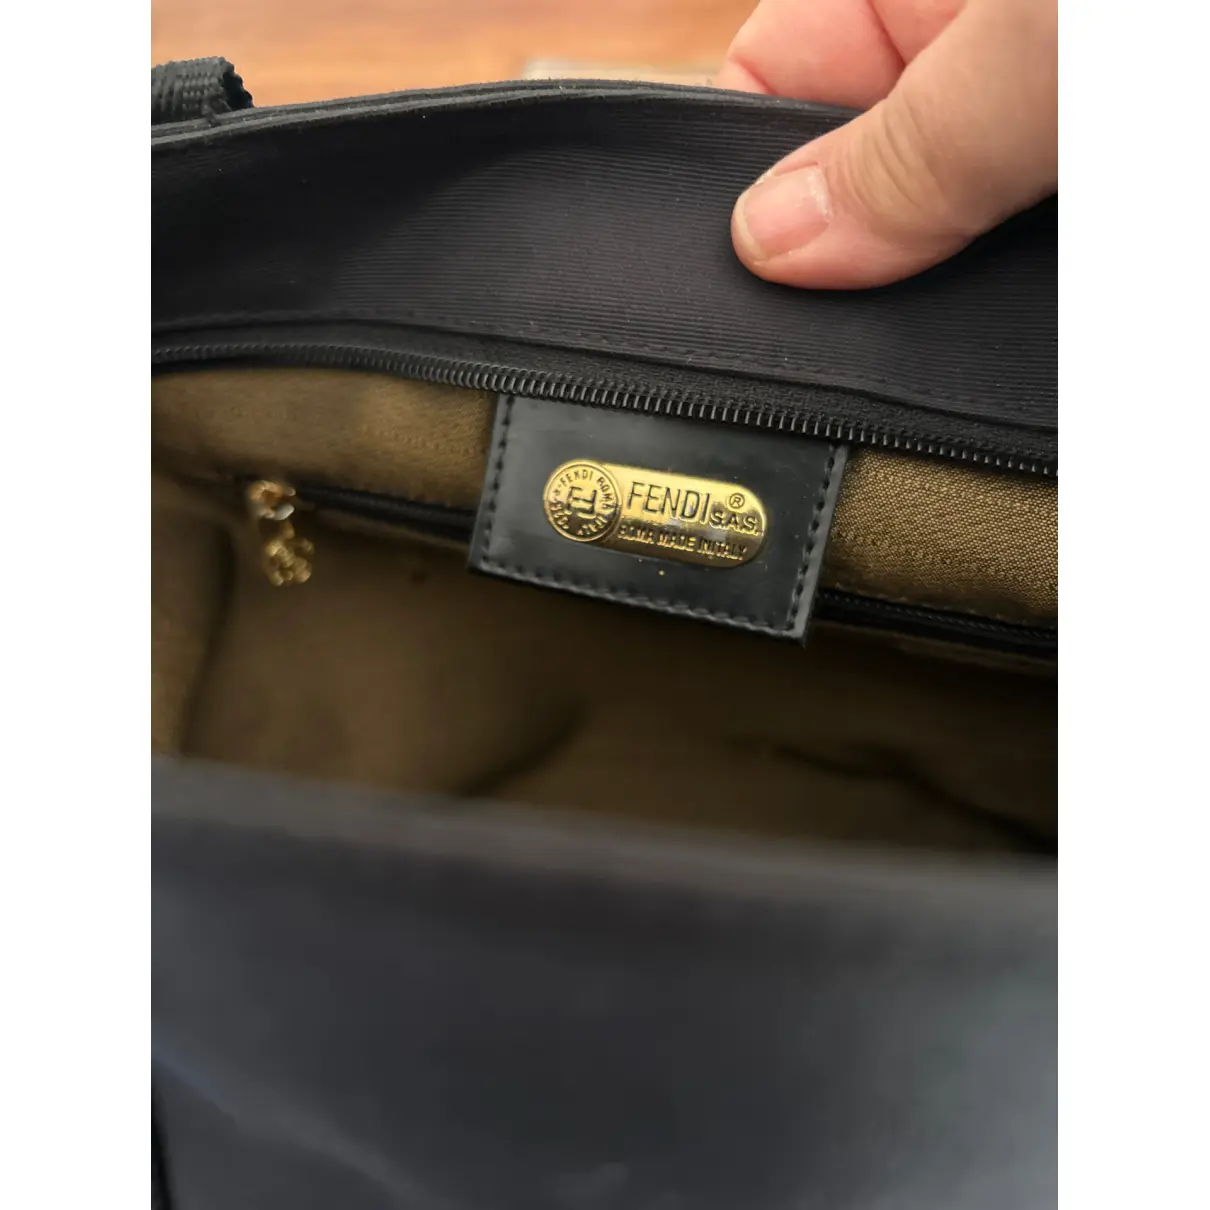 Buy Fendi X-Tote handbag online